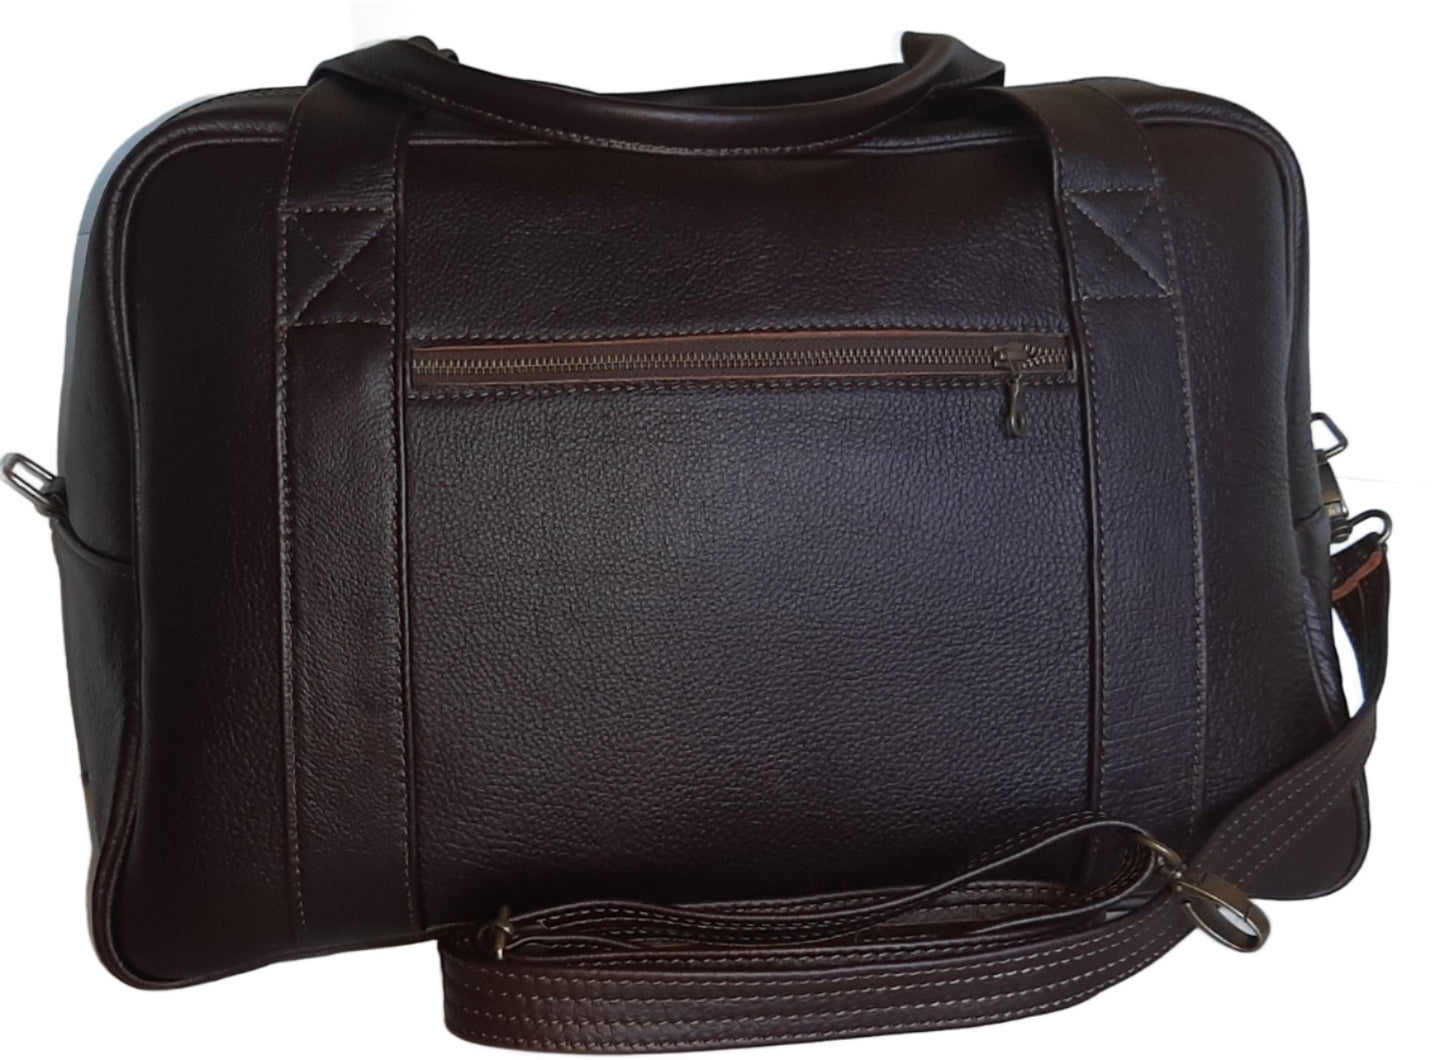 Cape Executive Traveler Bag in dark  tan colour - Cape Masai Leather  Edit alt text